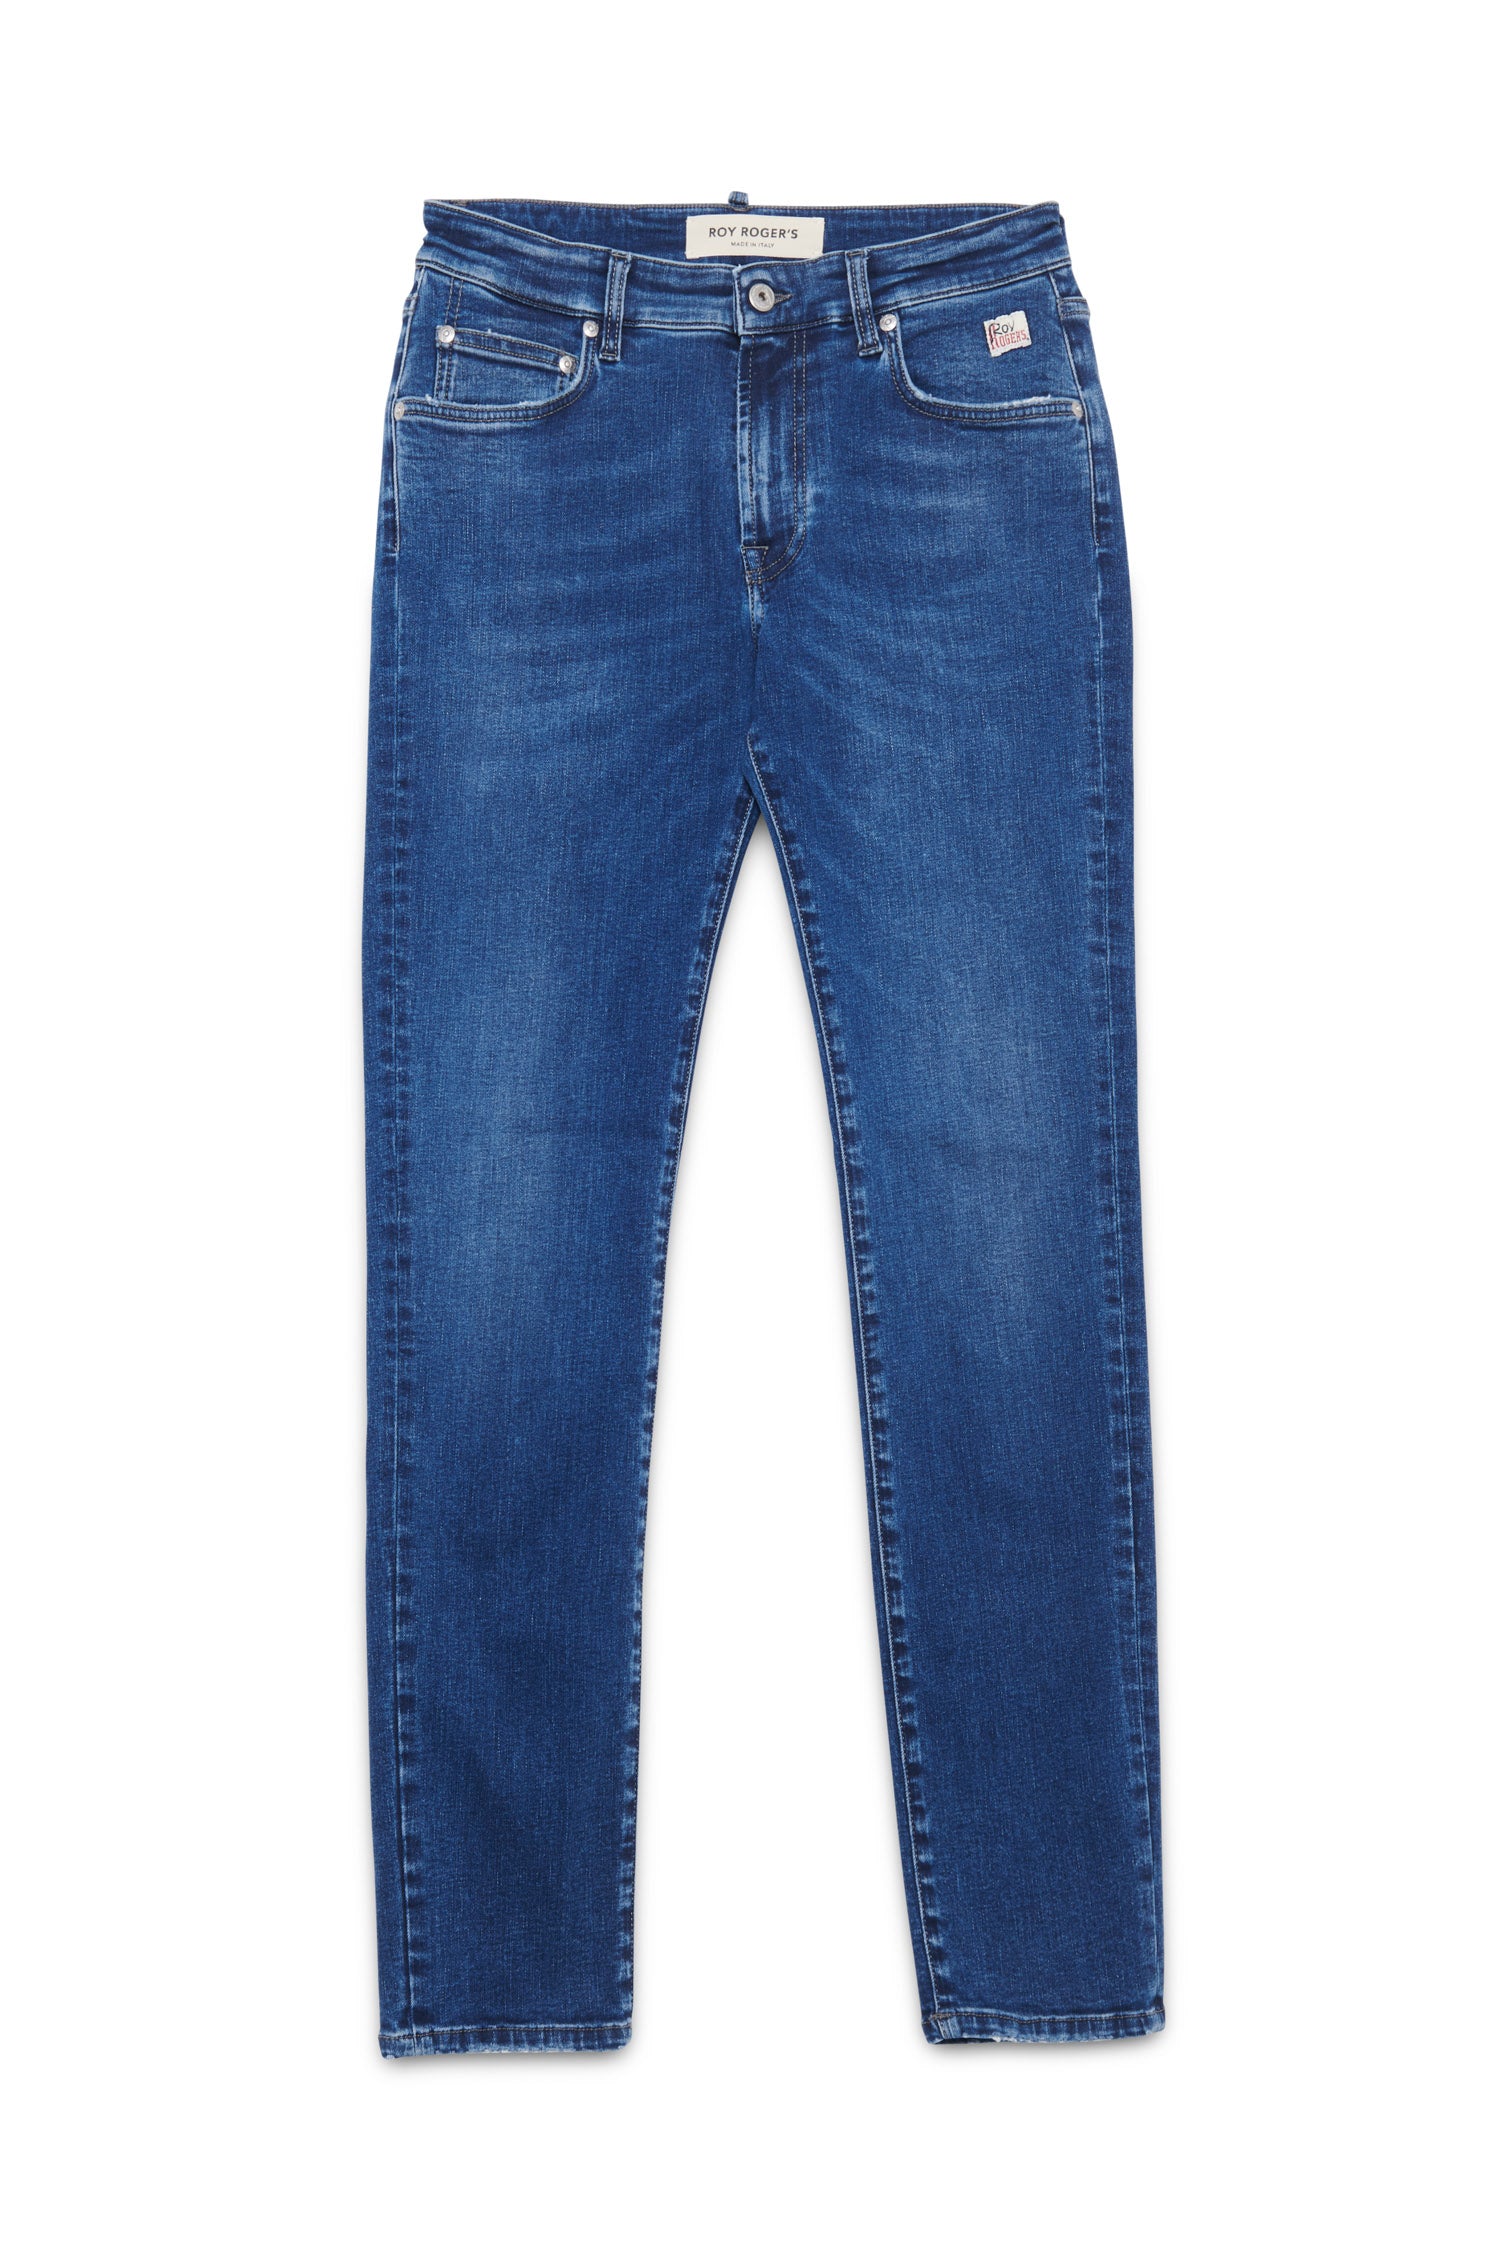 Jeans ROY ROGER'S 5 tasche skinny
Blu